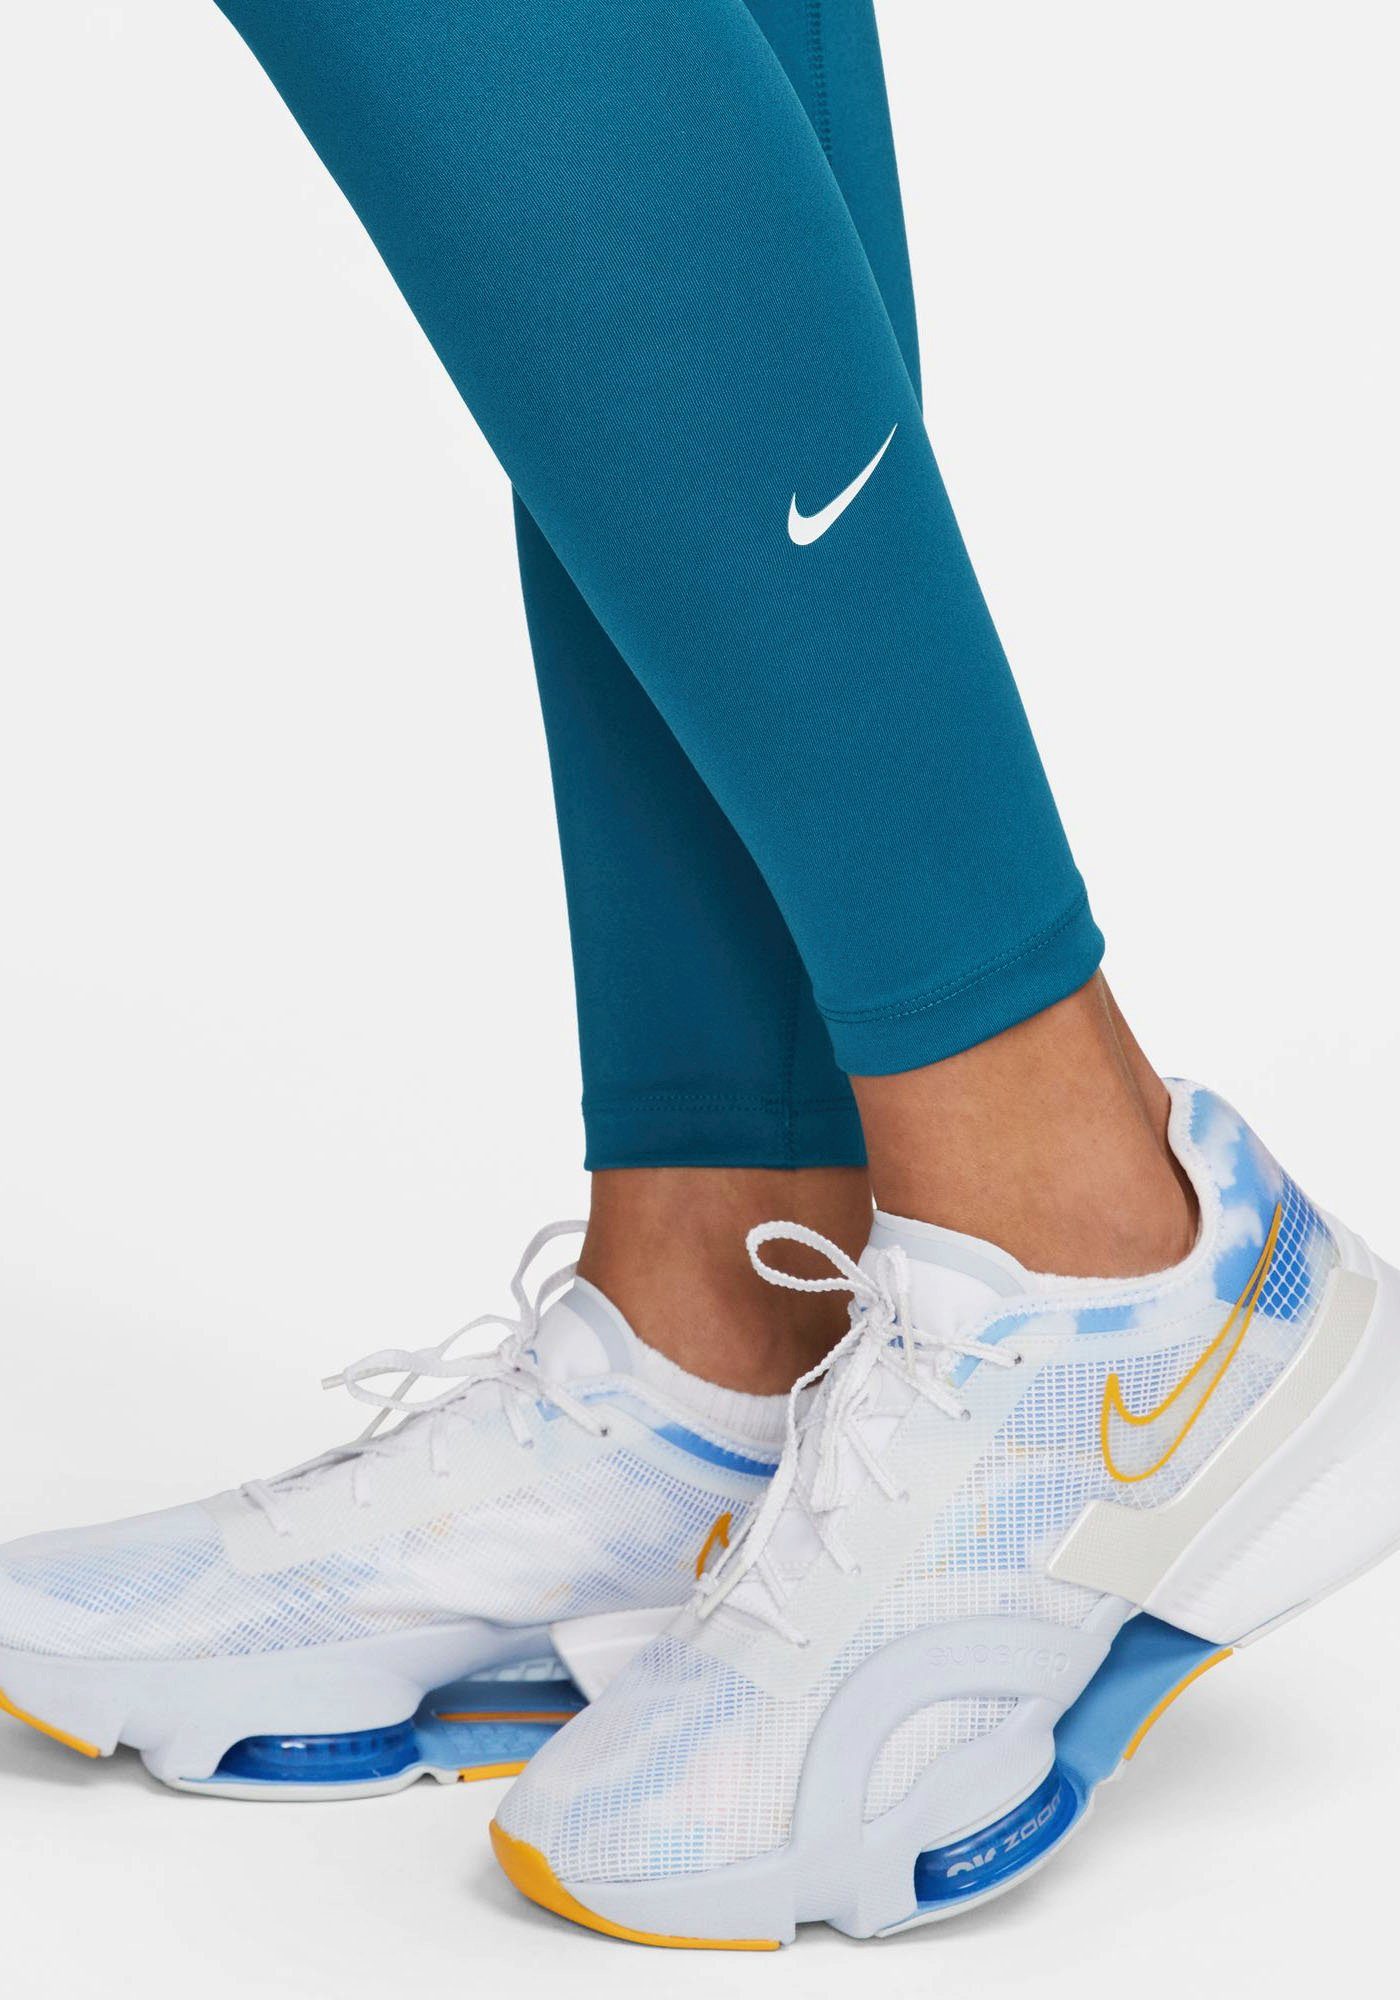 LEGGINGS ONE INDUSTRIAL Nike BLUE/WHITE HIGH-RISE Trainingstights WOMEN'S